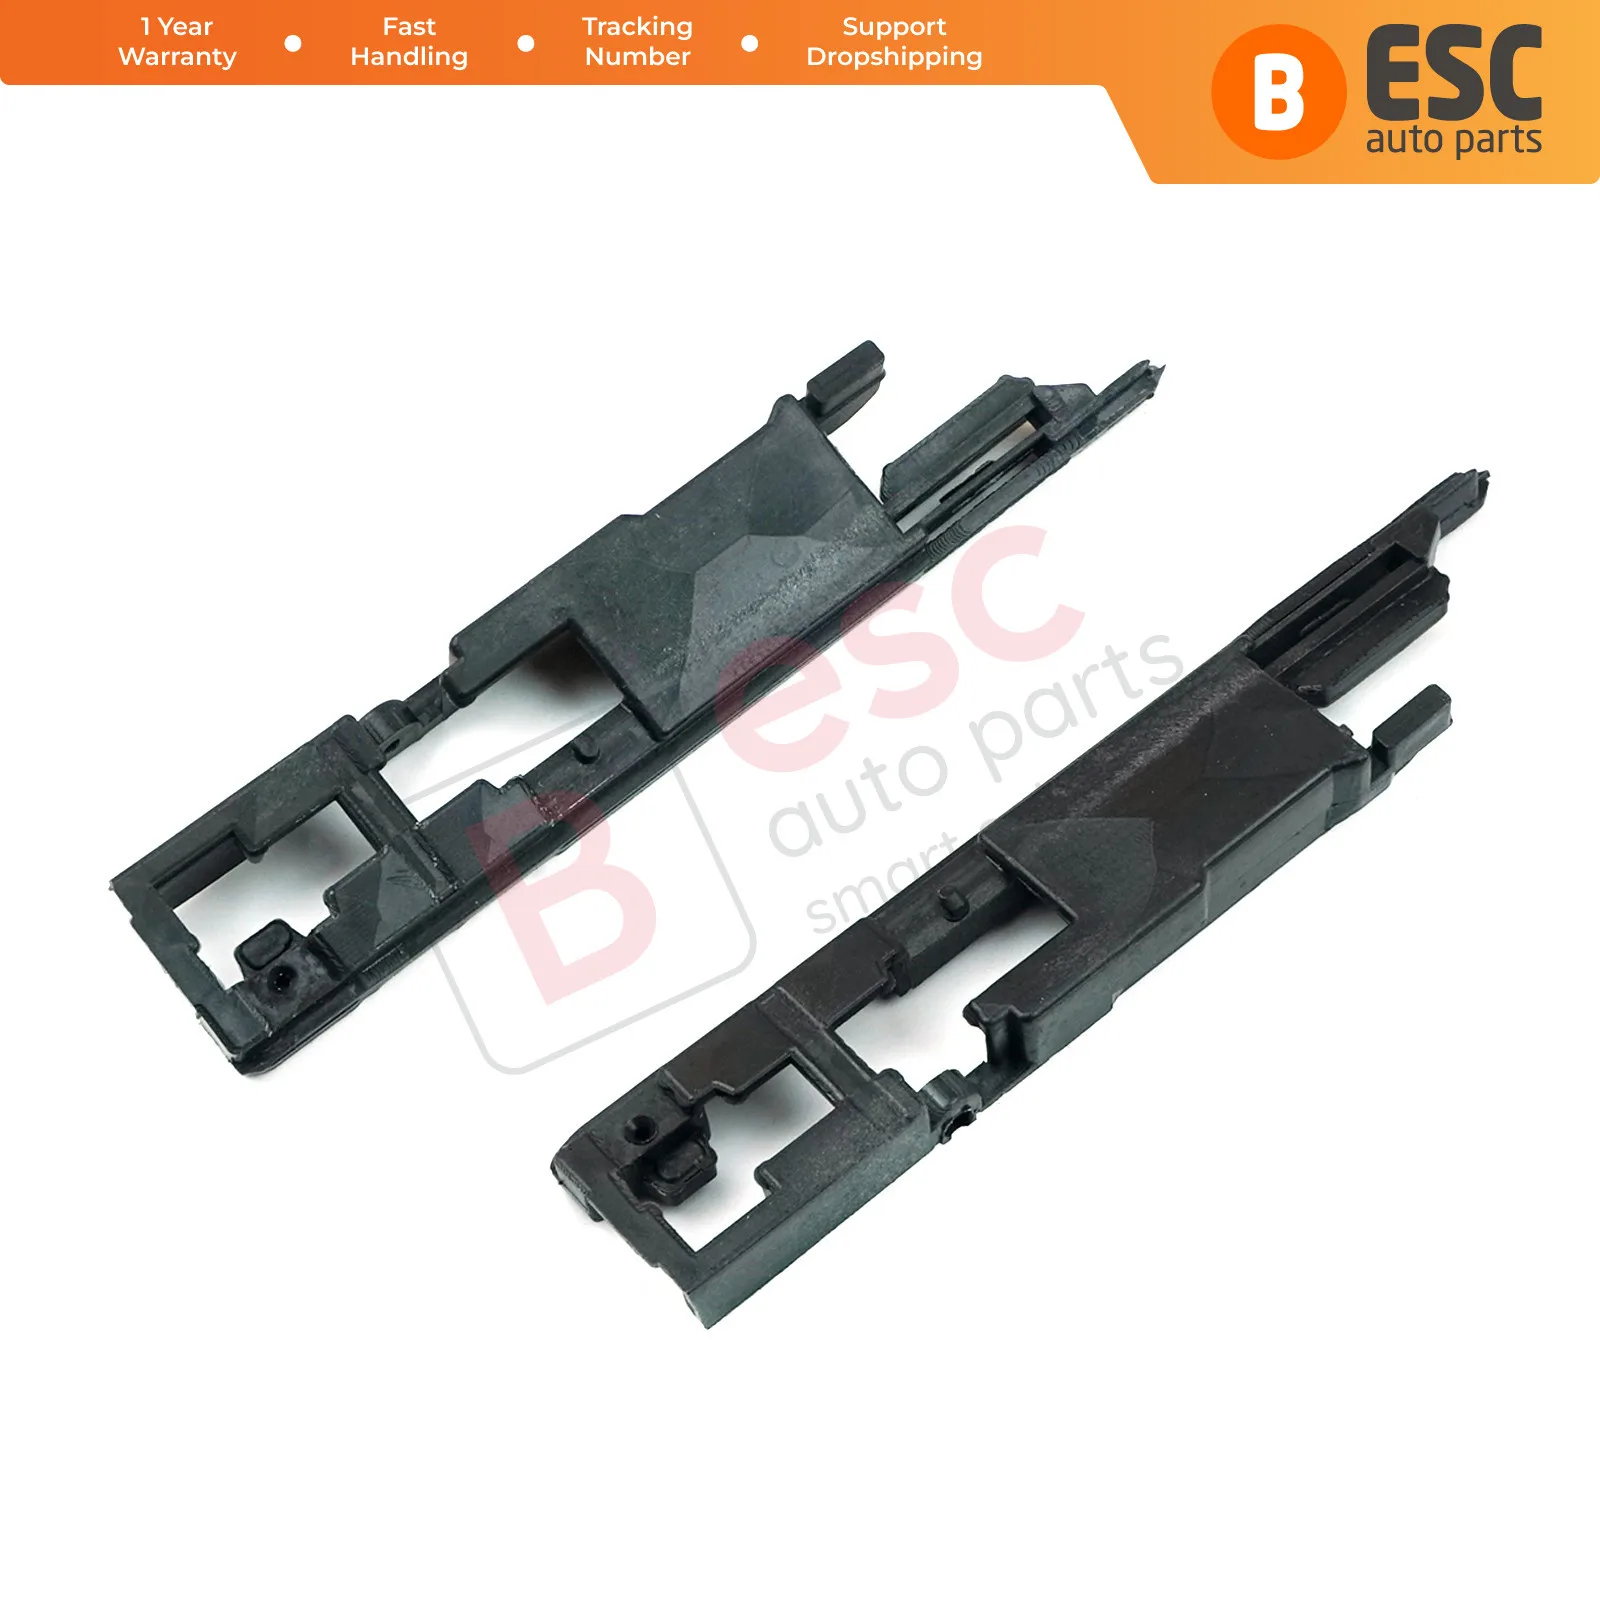 

ESC Auto Parts ESR544 Sunroof Sunshade Runner Repair Parts 54107199478 for BMW X5 X3 E61 Fast Shipment Ship From Turkey